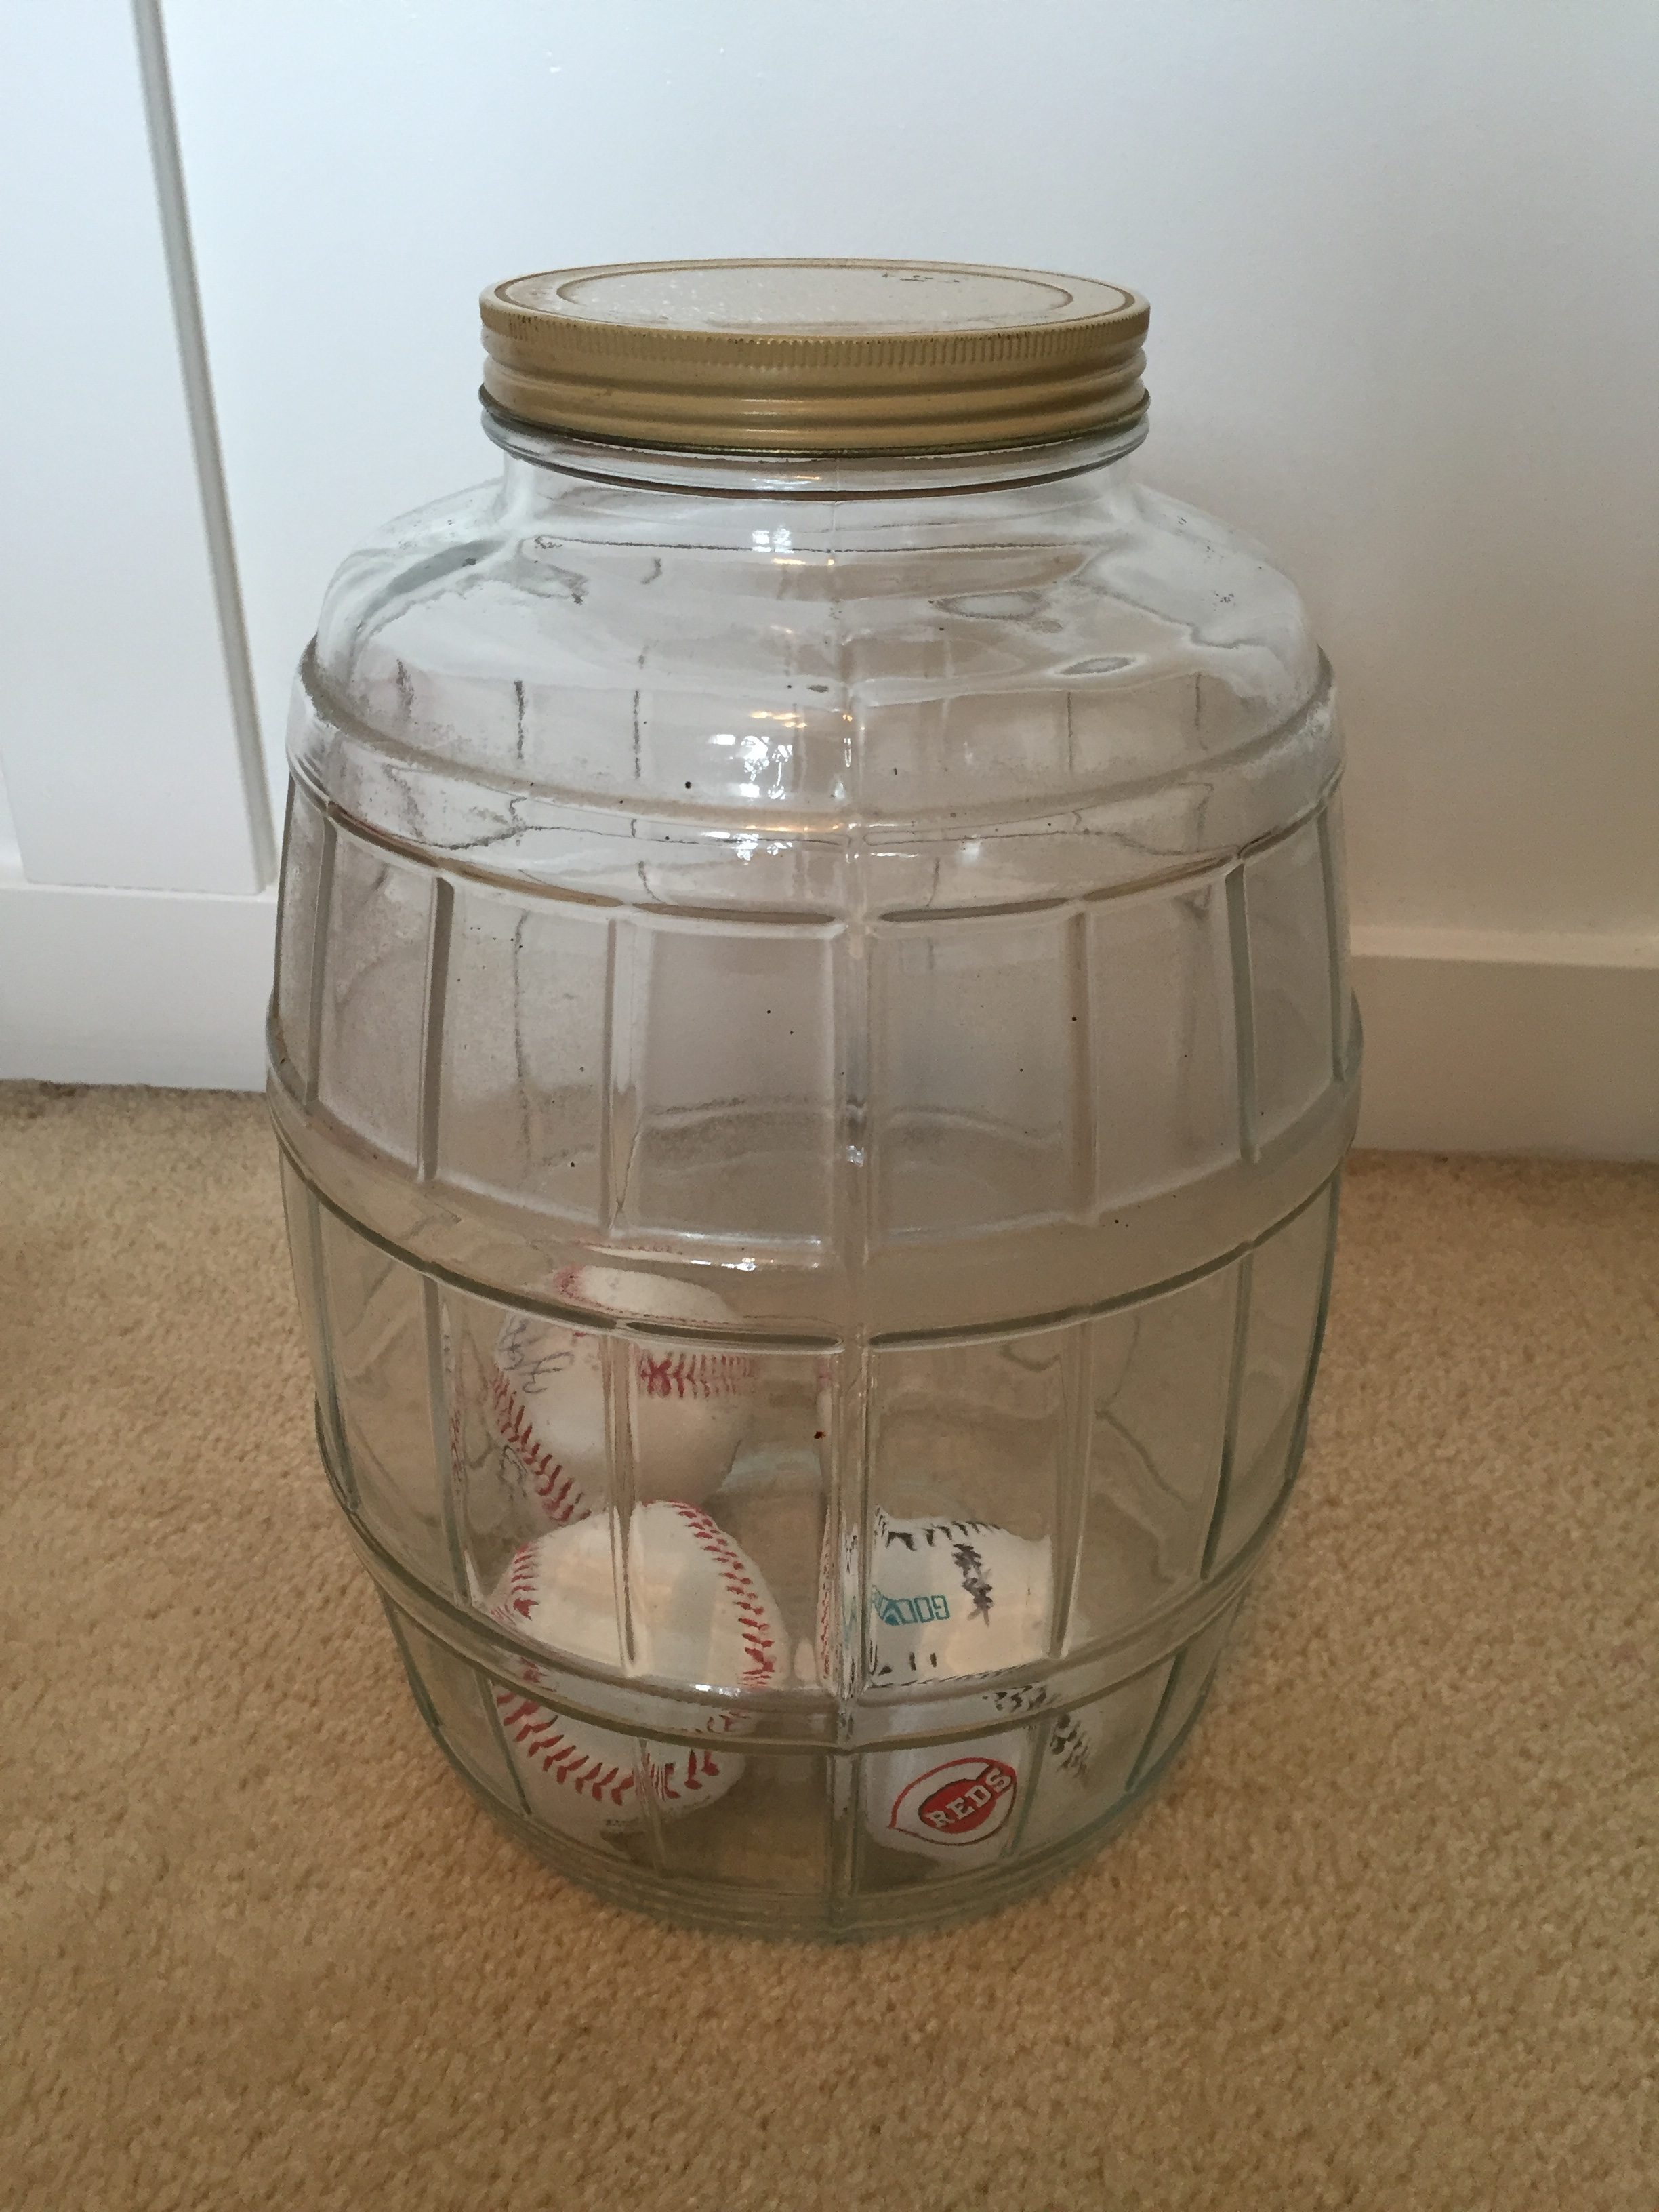 Large Antique Jar for housing Baseballs by www.whitecottagehomeandliving.com